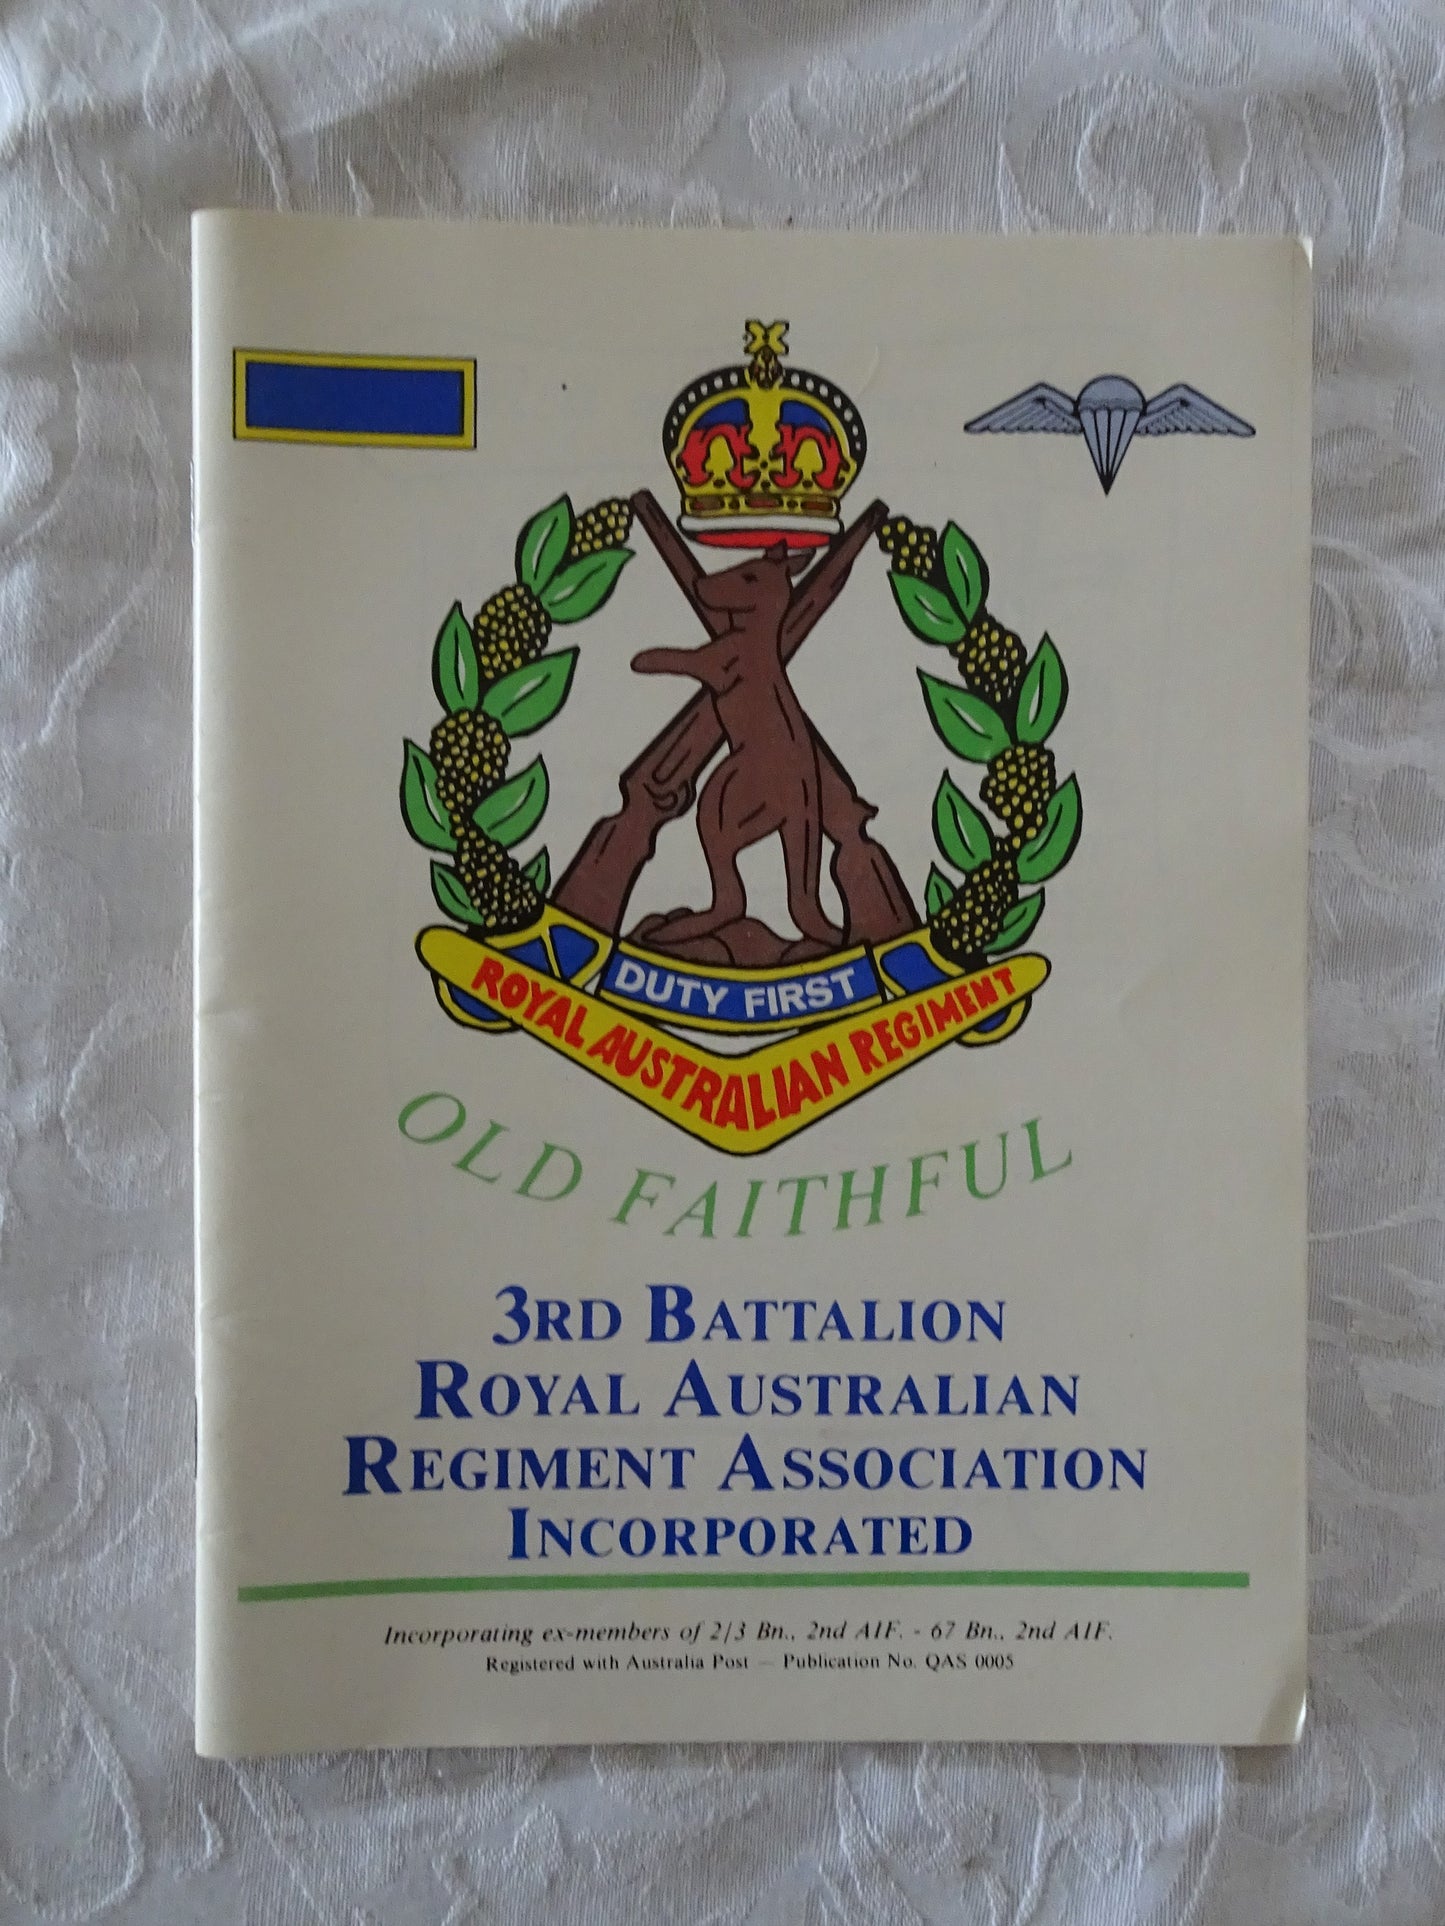 Old Faithful by 3rd Battalion Royal Australian Regiment Association Incorporated